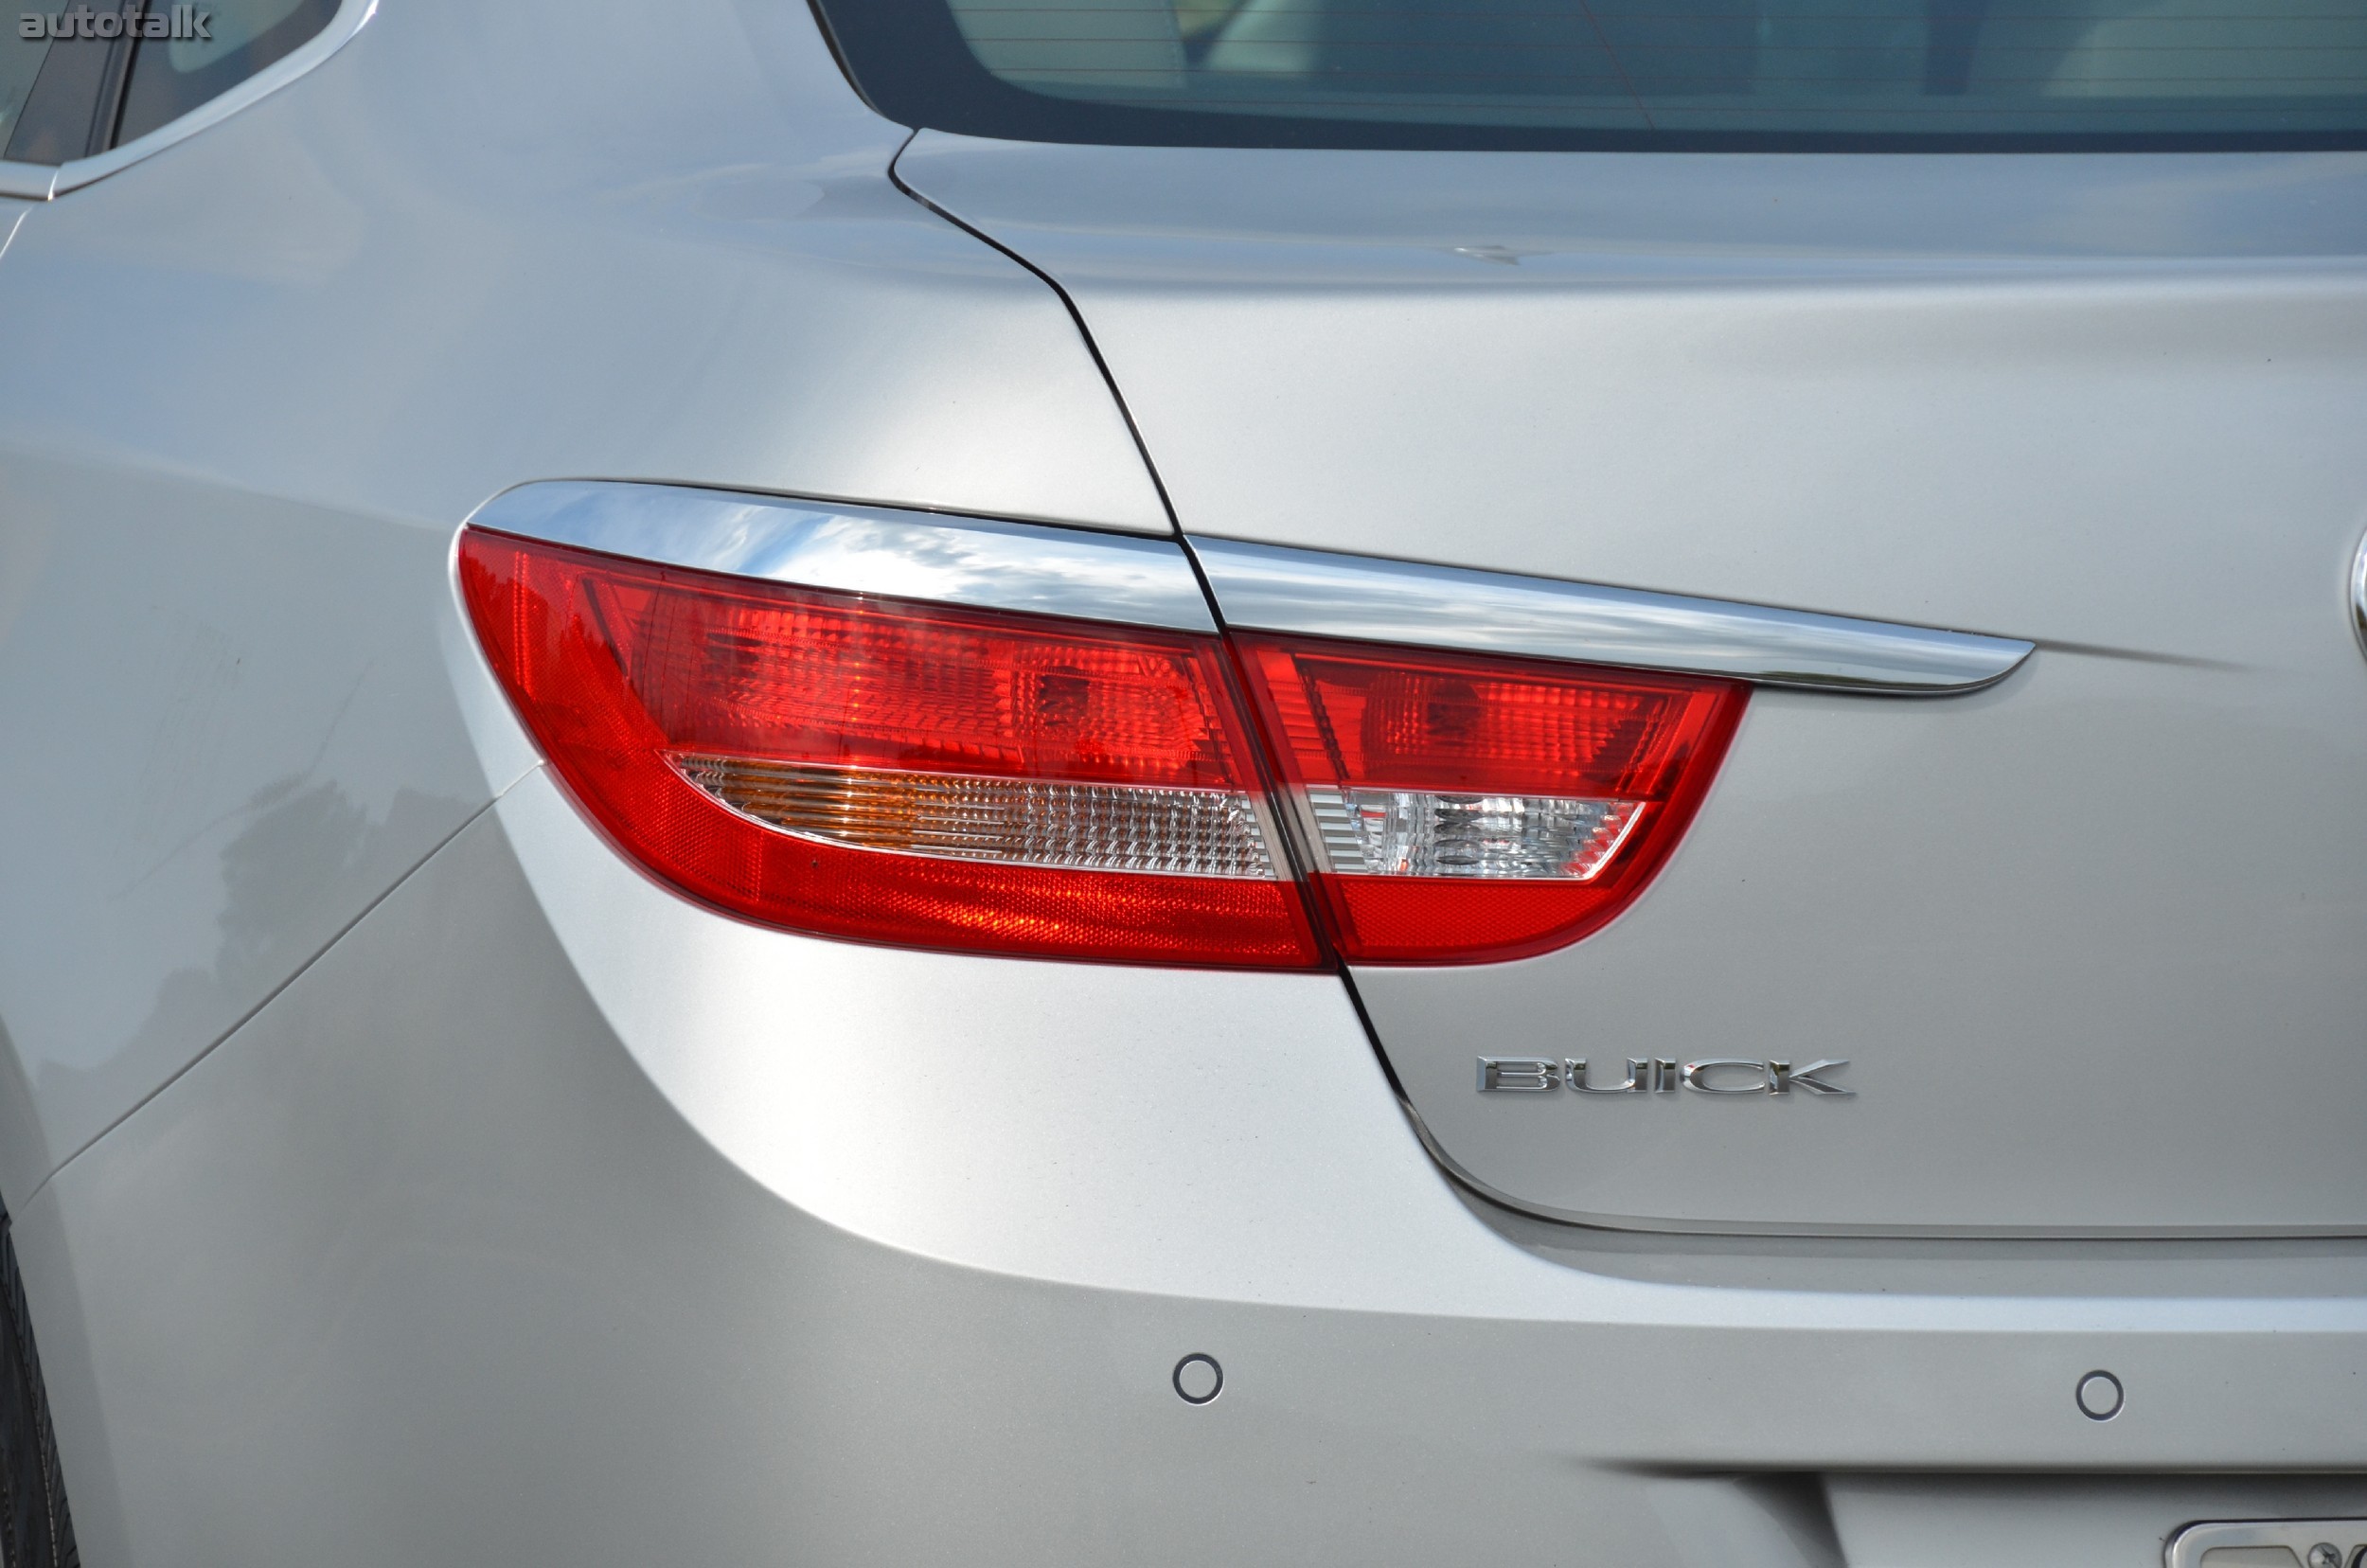 2012 Buick Verano Review